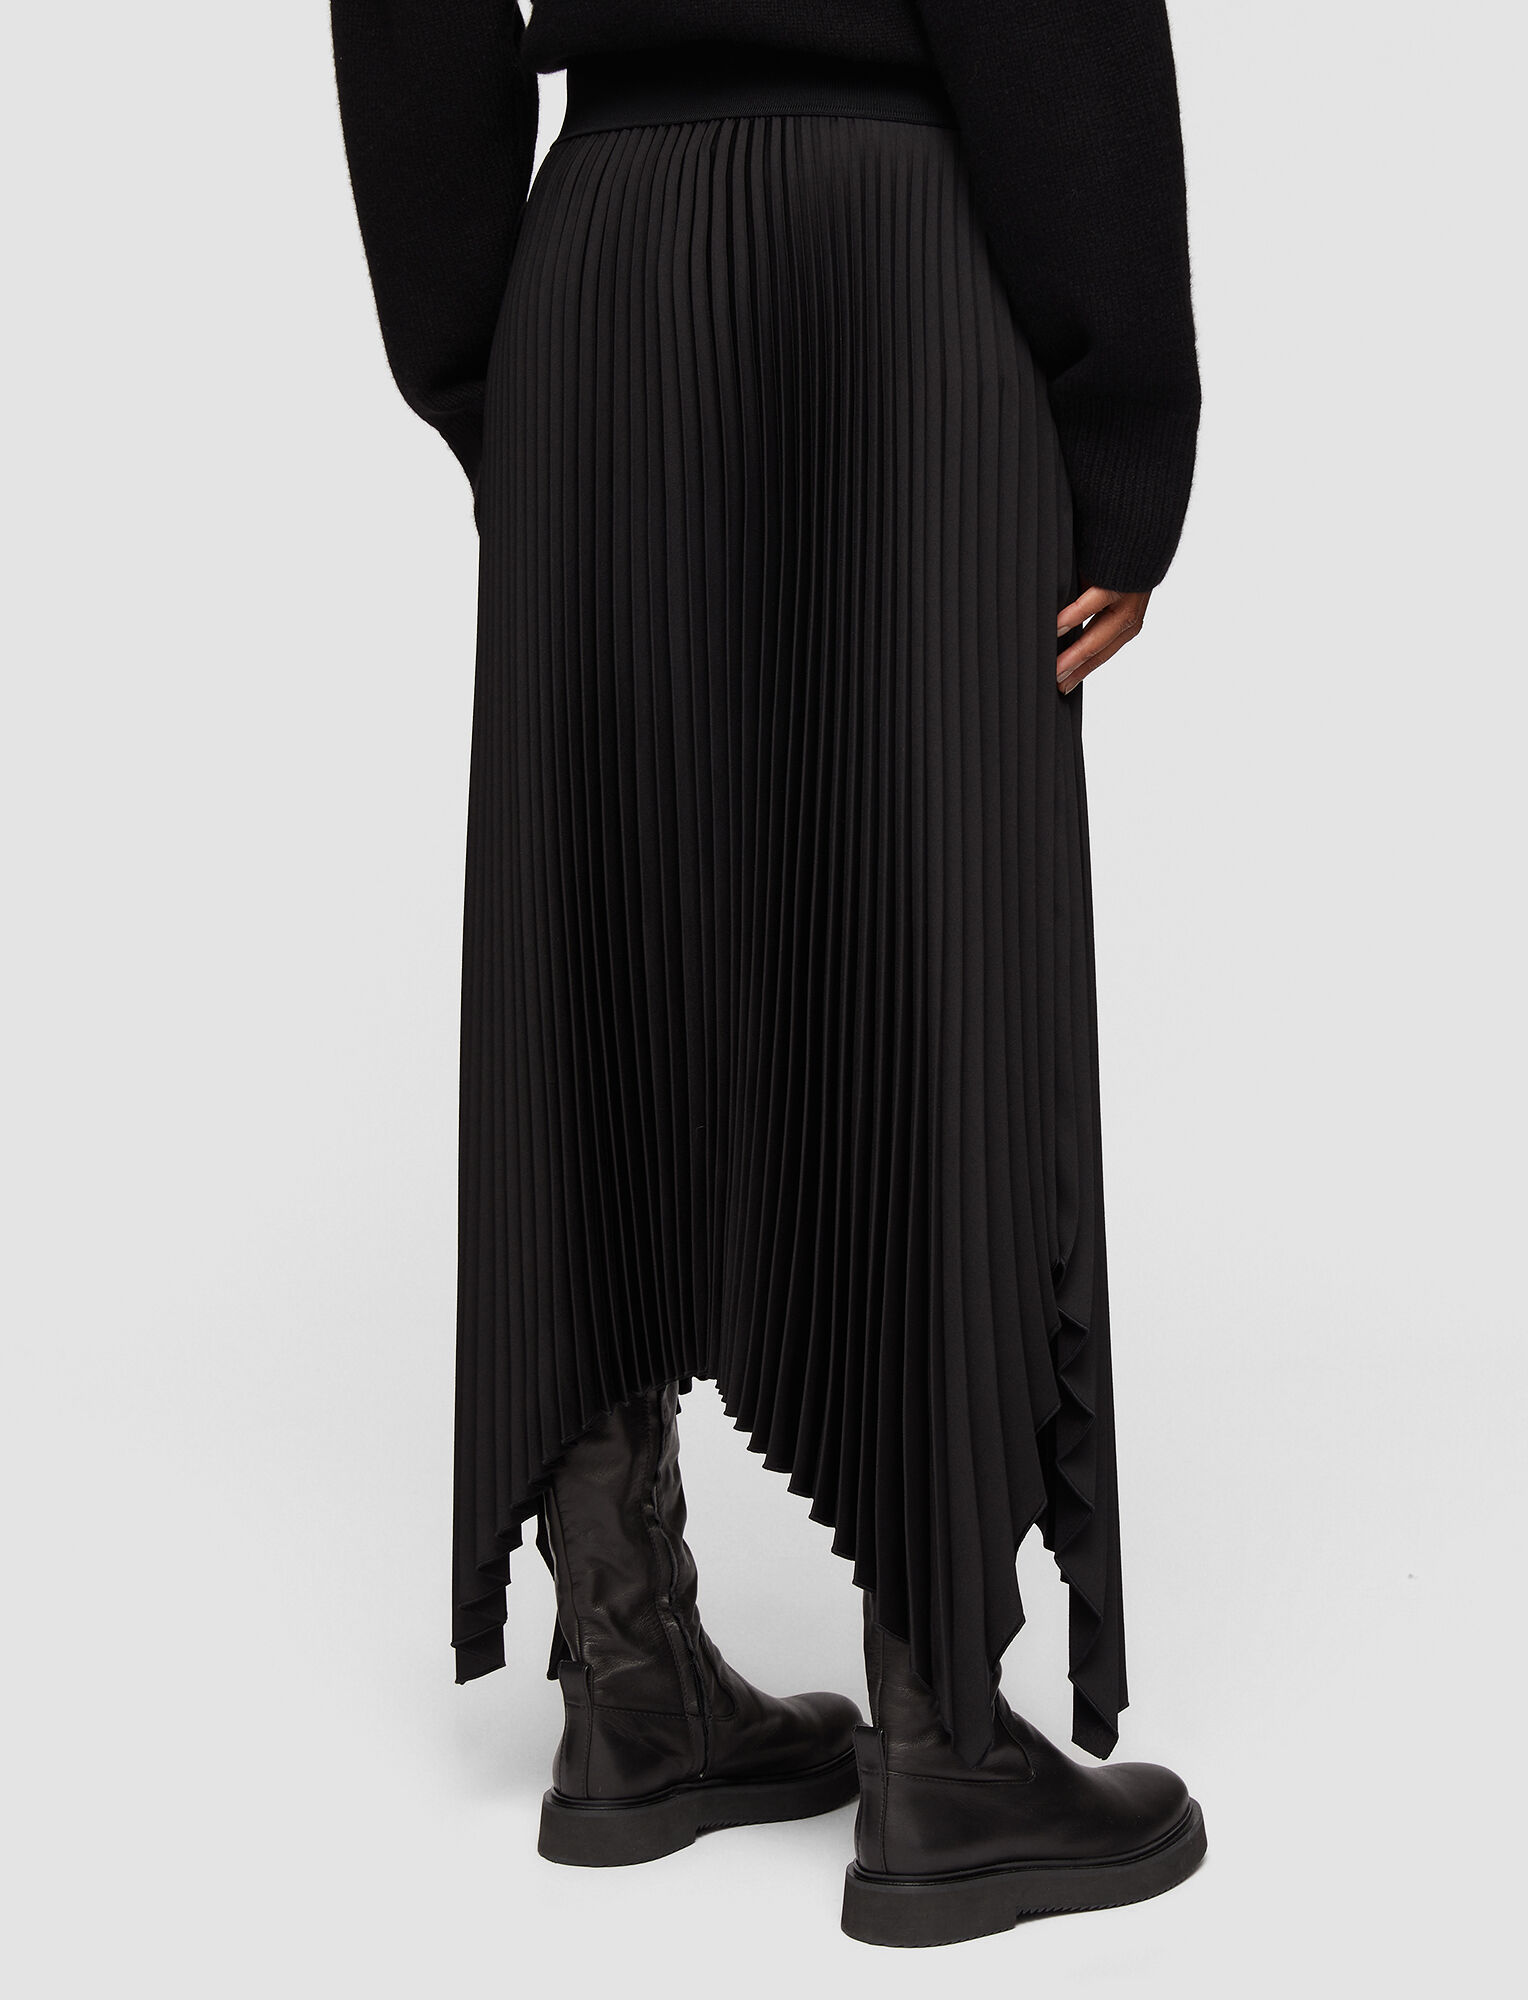 Joseph, Knit Weave Plissé Ade Skirt, in BLACK